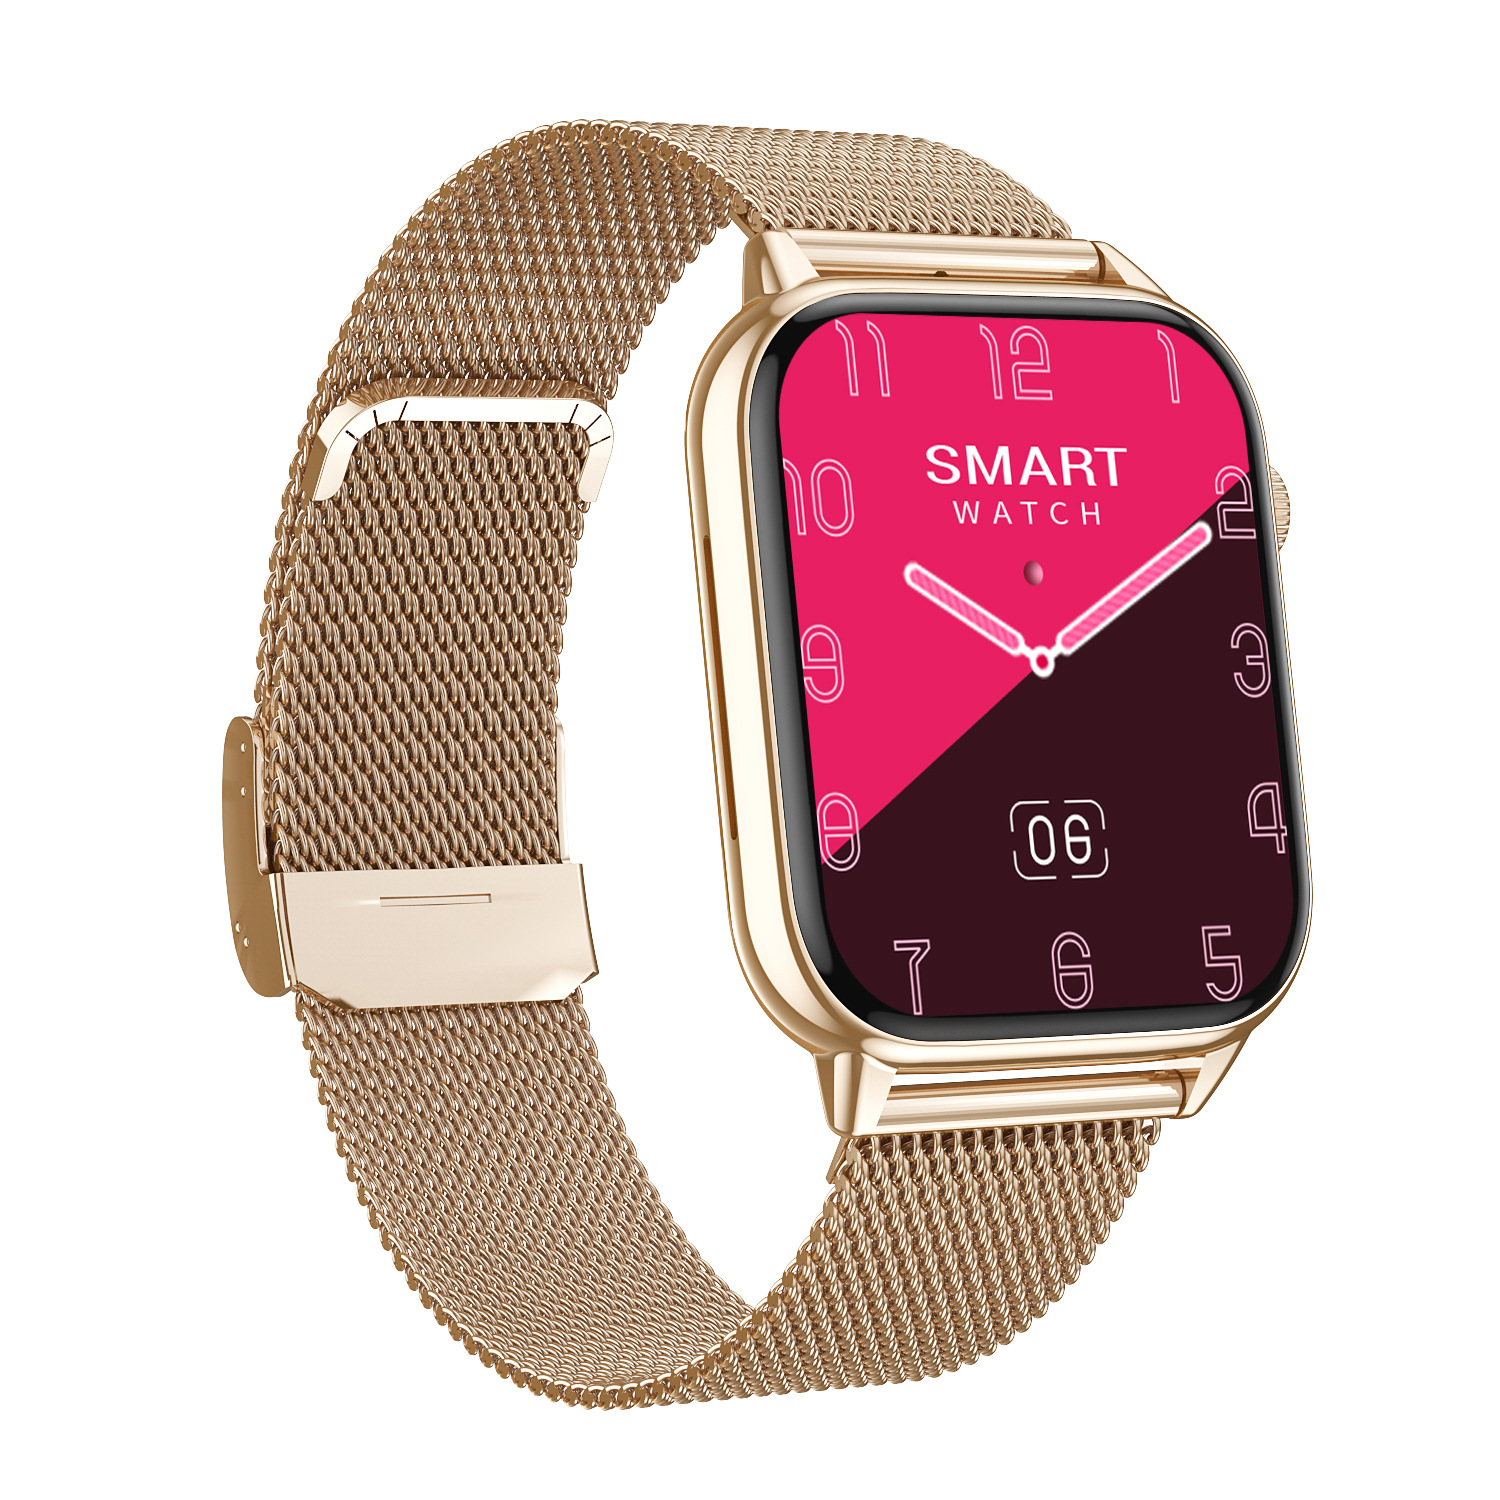 Herzfrequenz Gold NFC Watch Gold Stahlbanduhr Smartwatch Gold Sauerstoffüberwachung Blutdruck Smart Stahlgürtel, SYNTEK